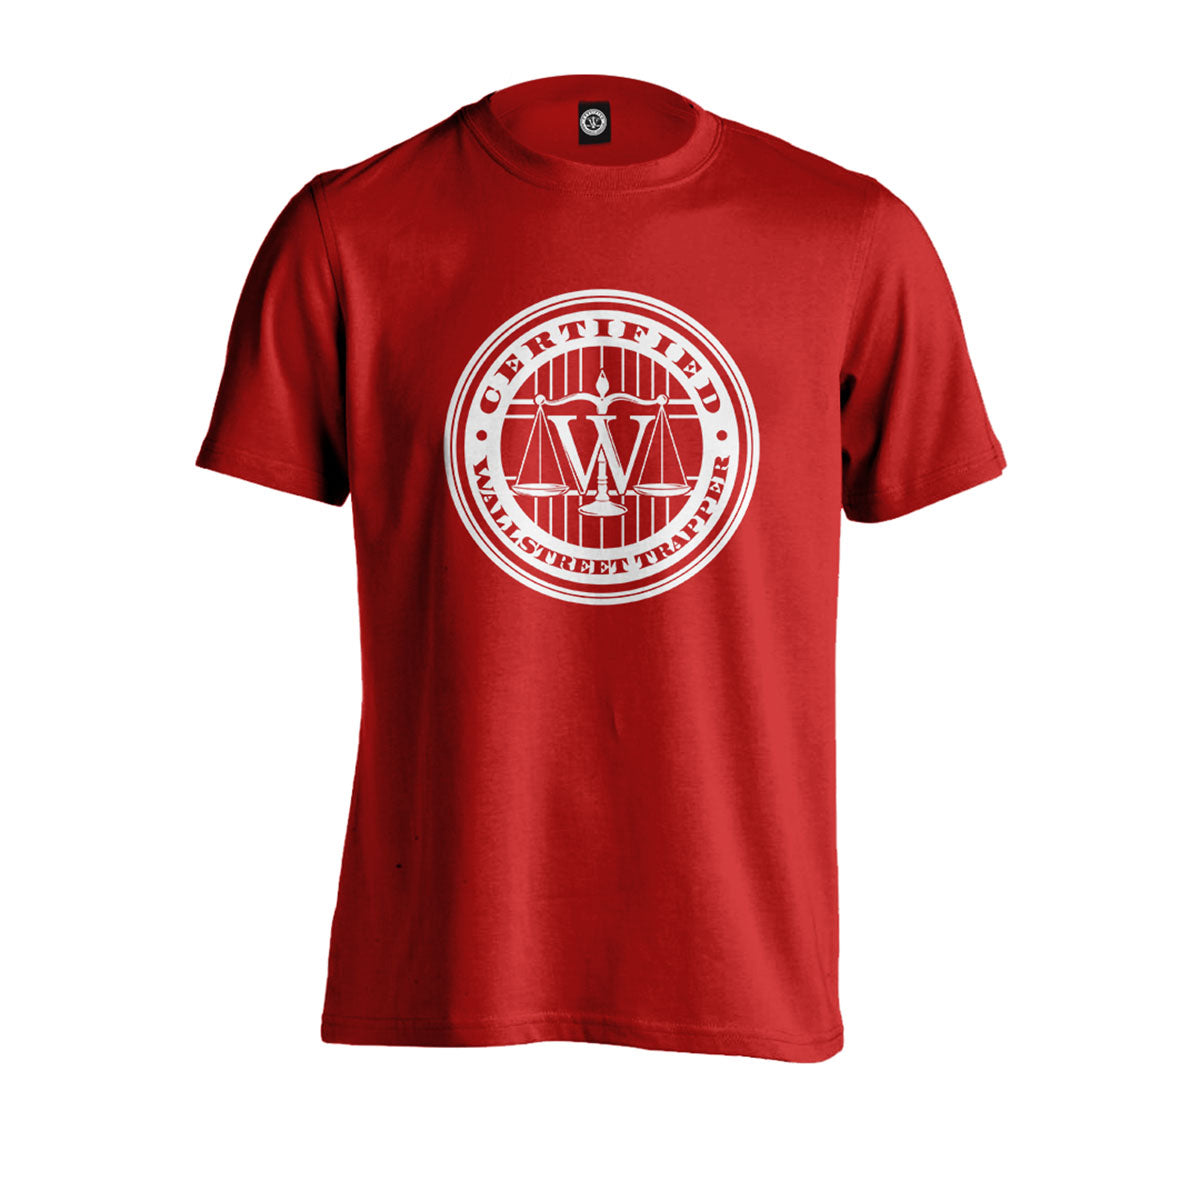 Certified Wall Street Trapper T-Shirt